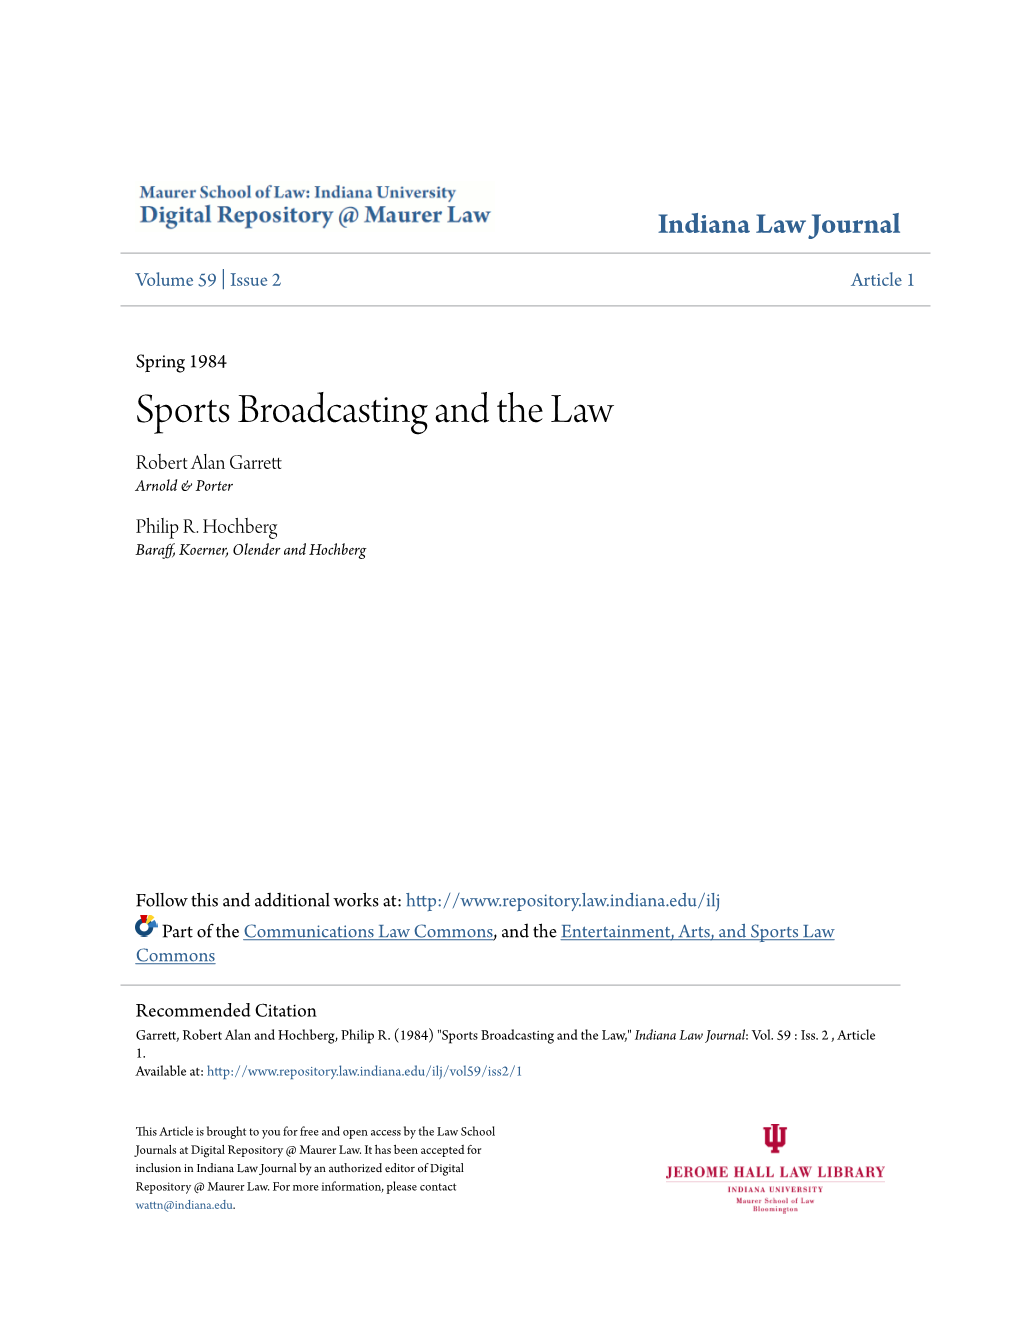 Sports Broadcasting and the Law Robert Alan Garrett Arnold & Porter